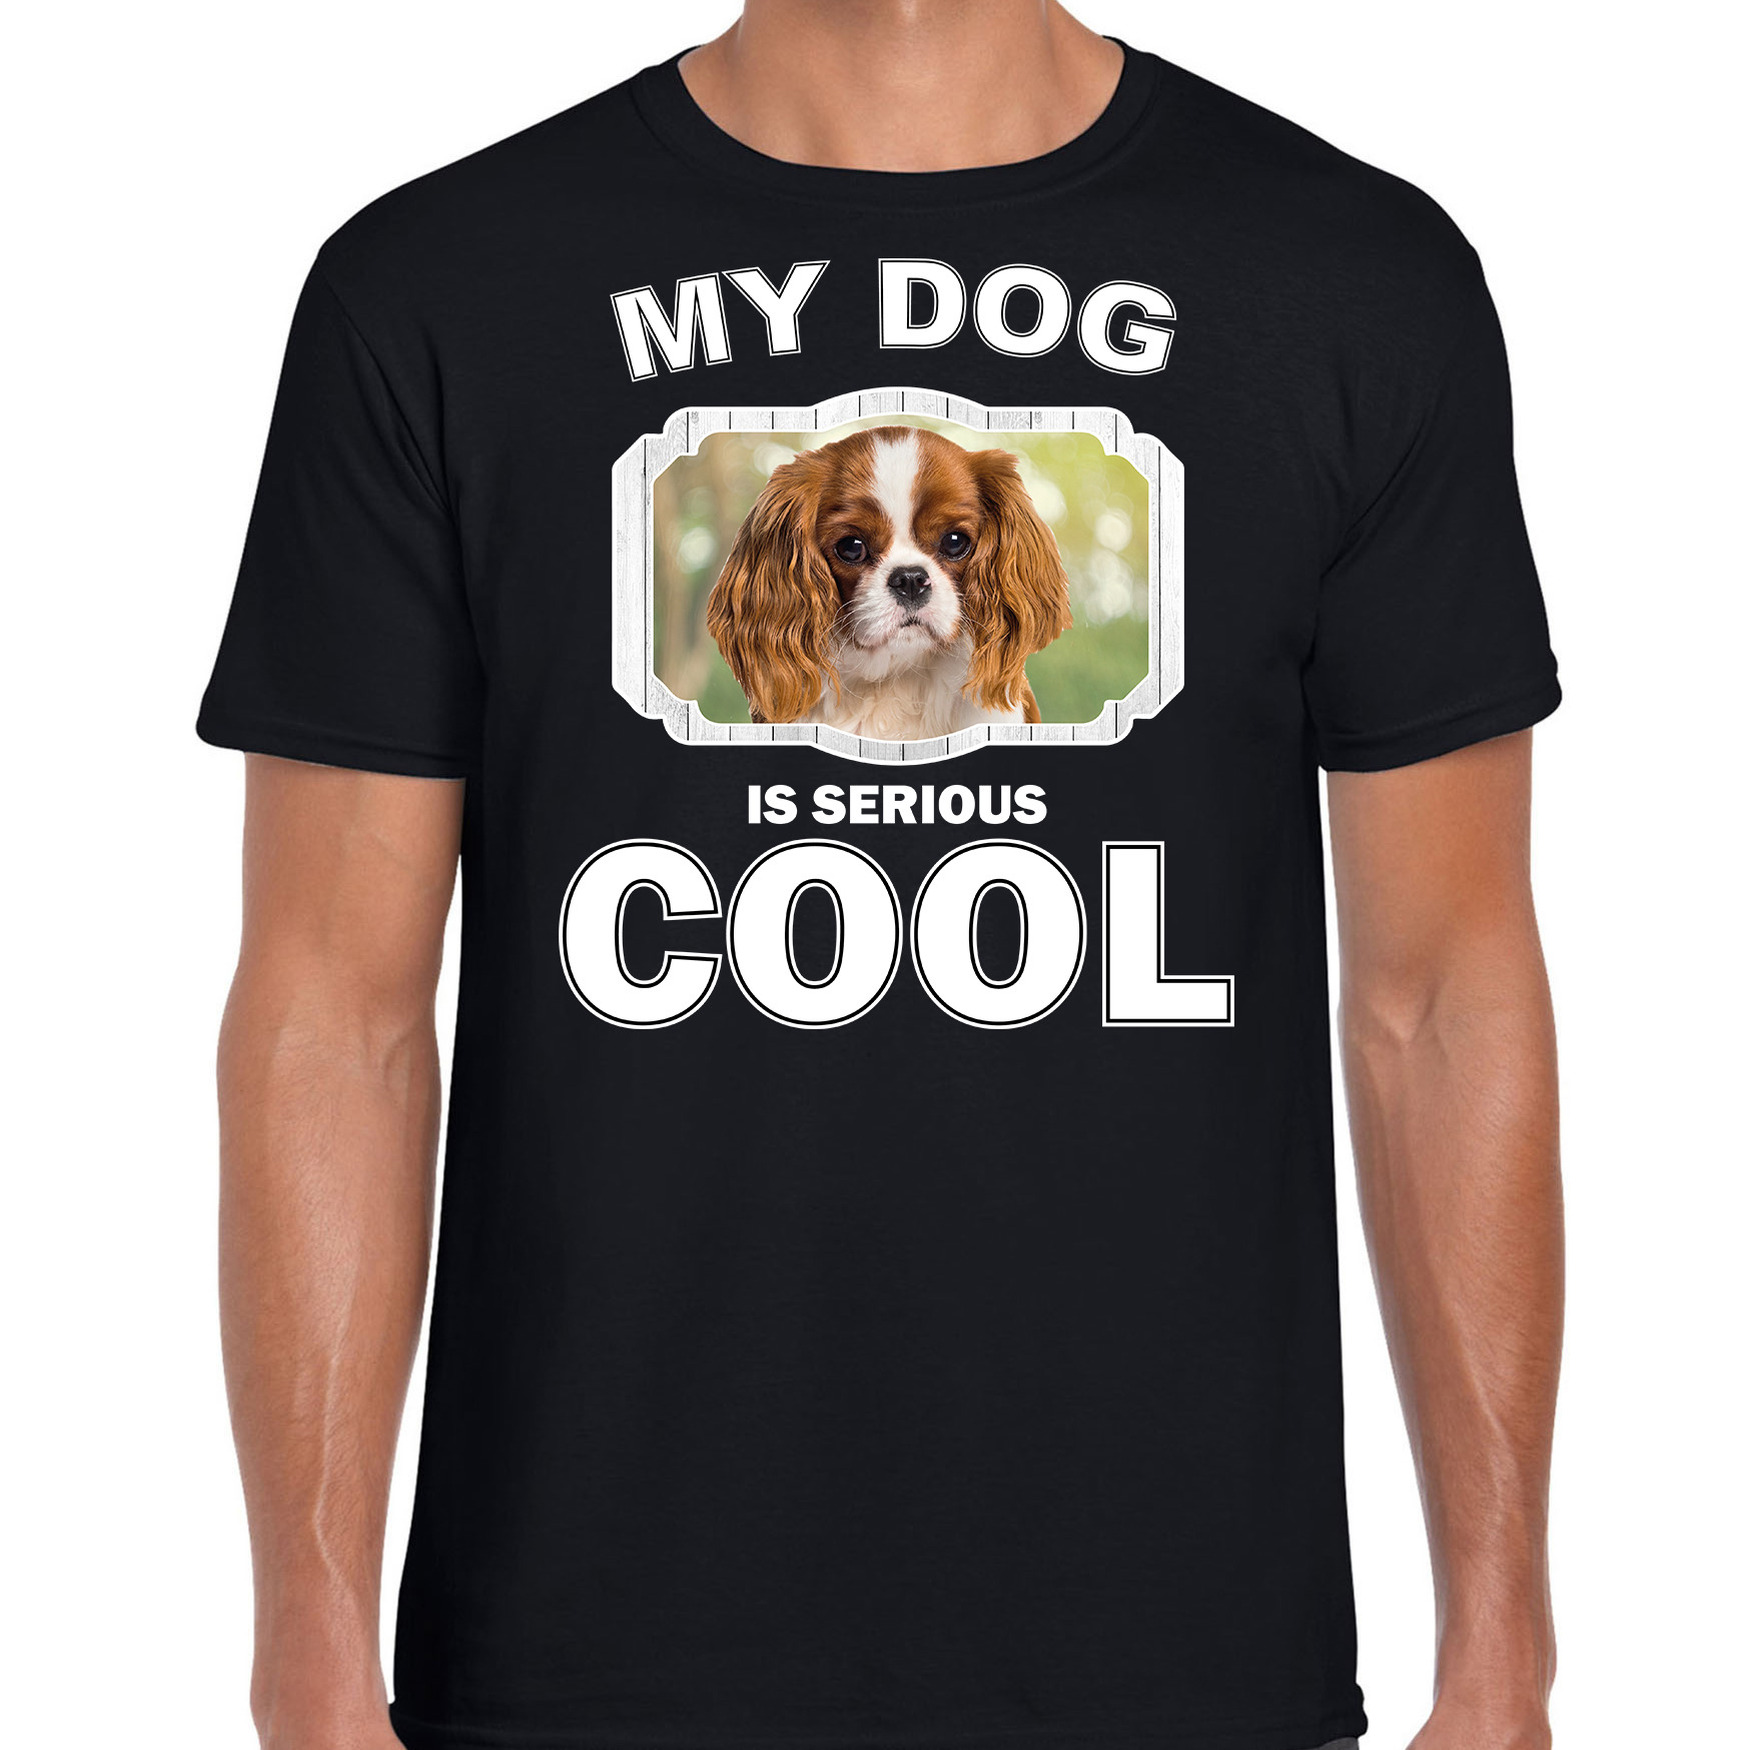 Charles spaniel honden t-shirt my dog is serious cool zwart voor heren